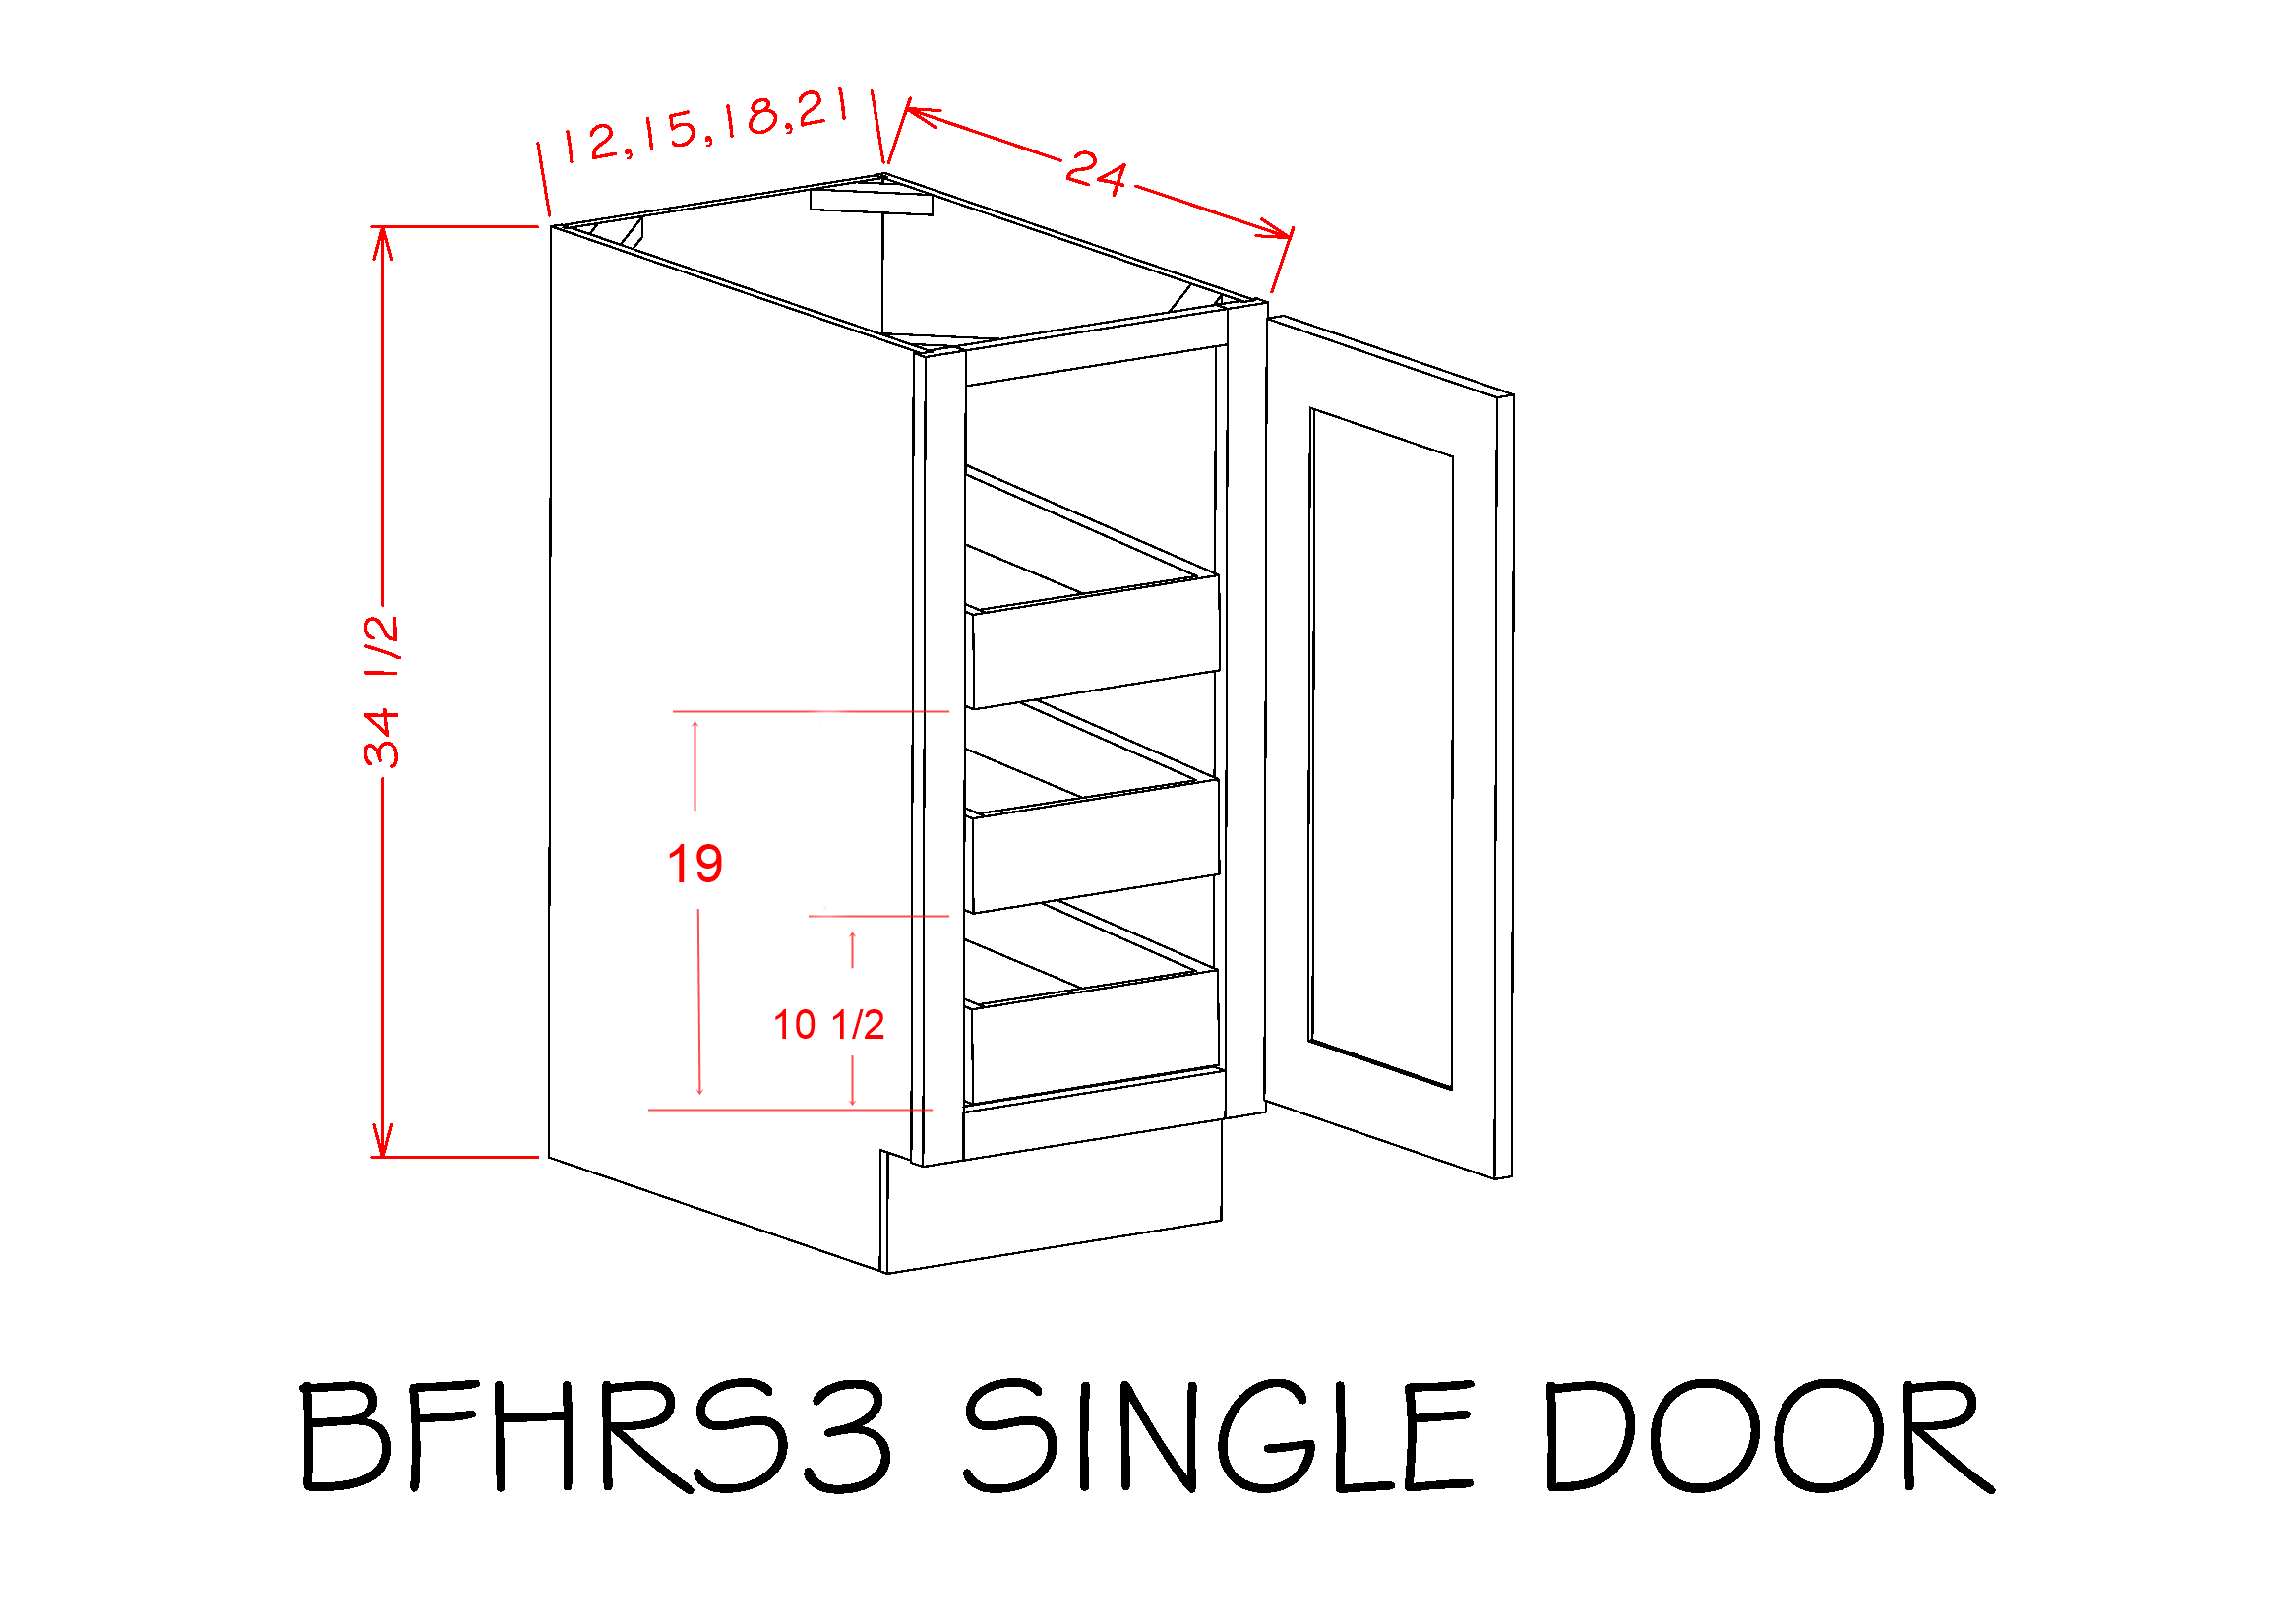 Full Height Single Door Triple Rollout Shelf Bases